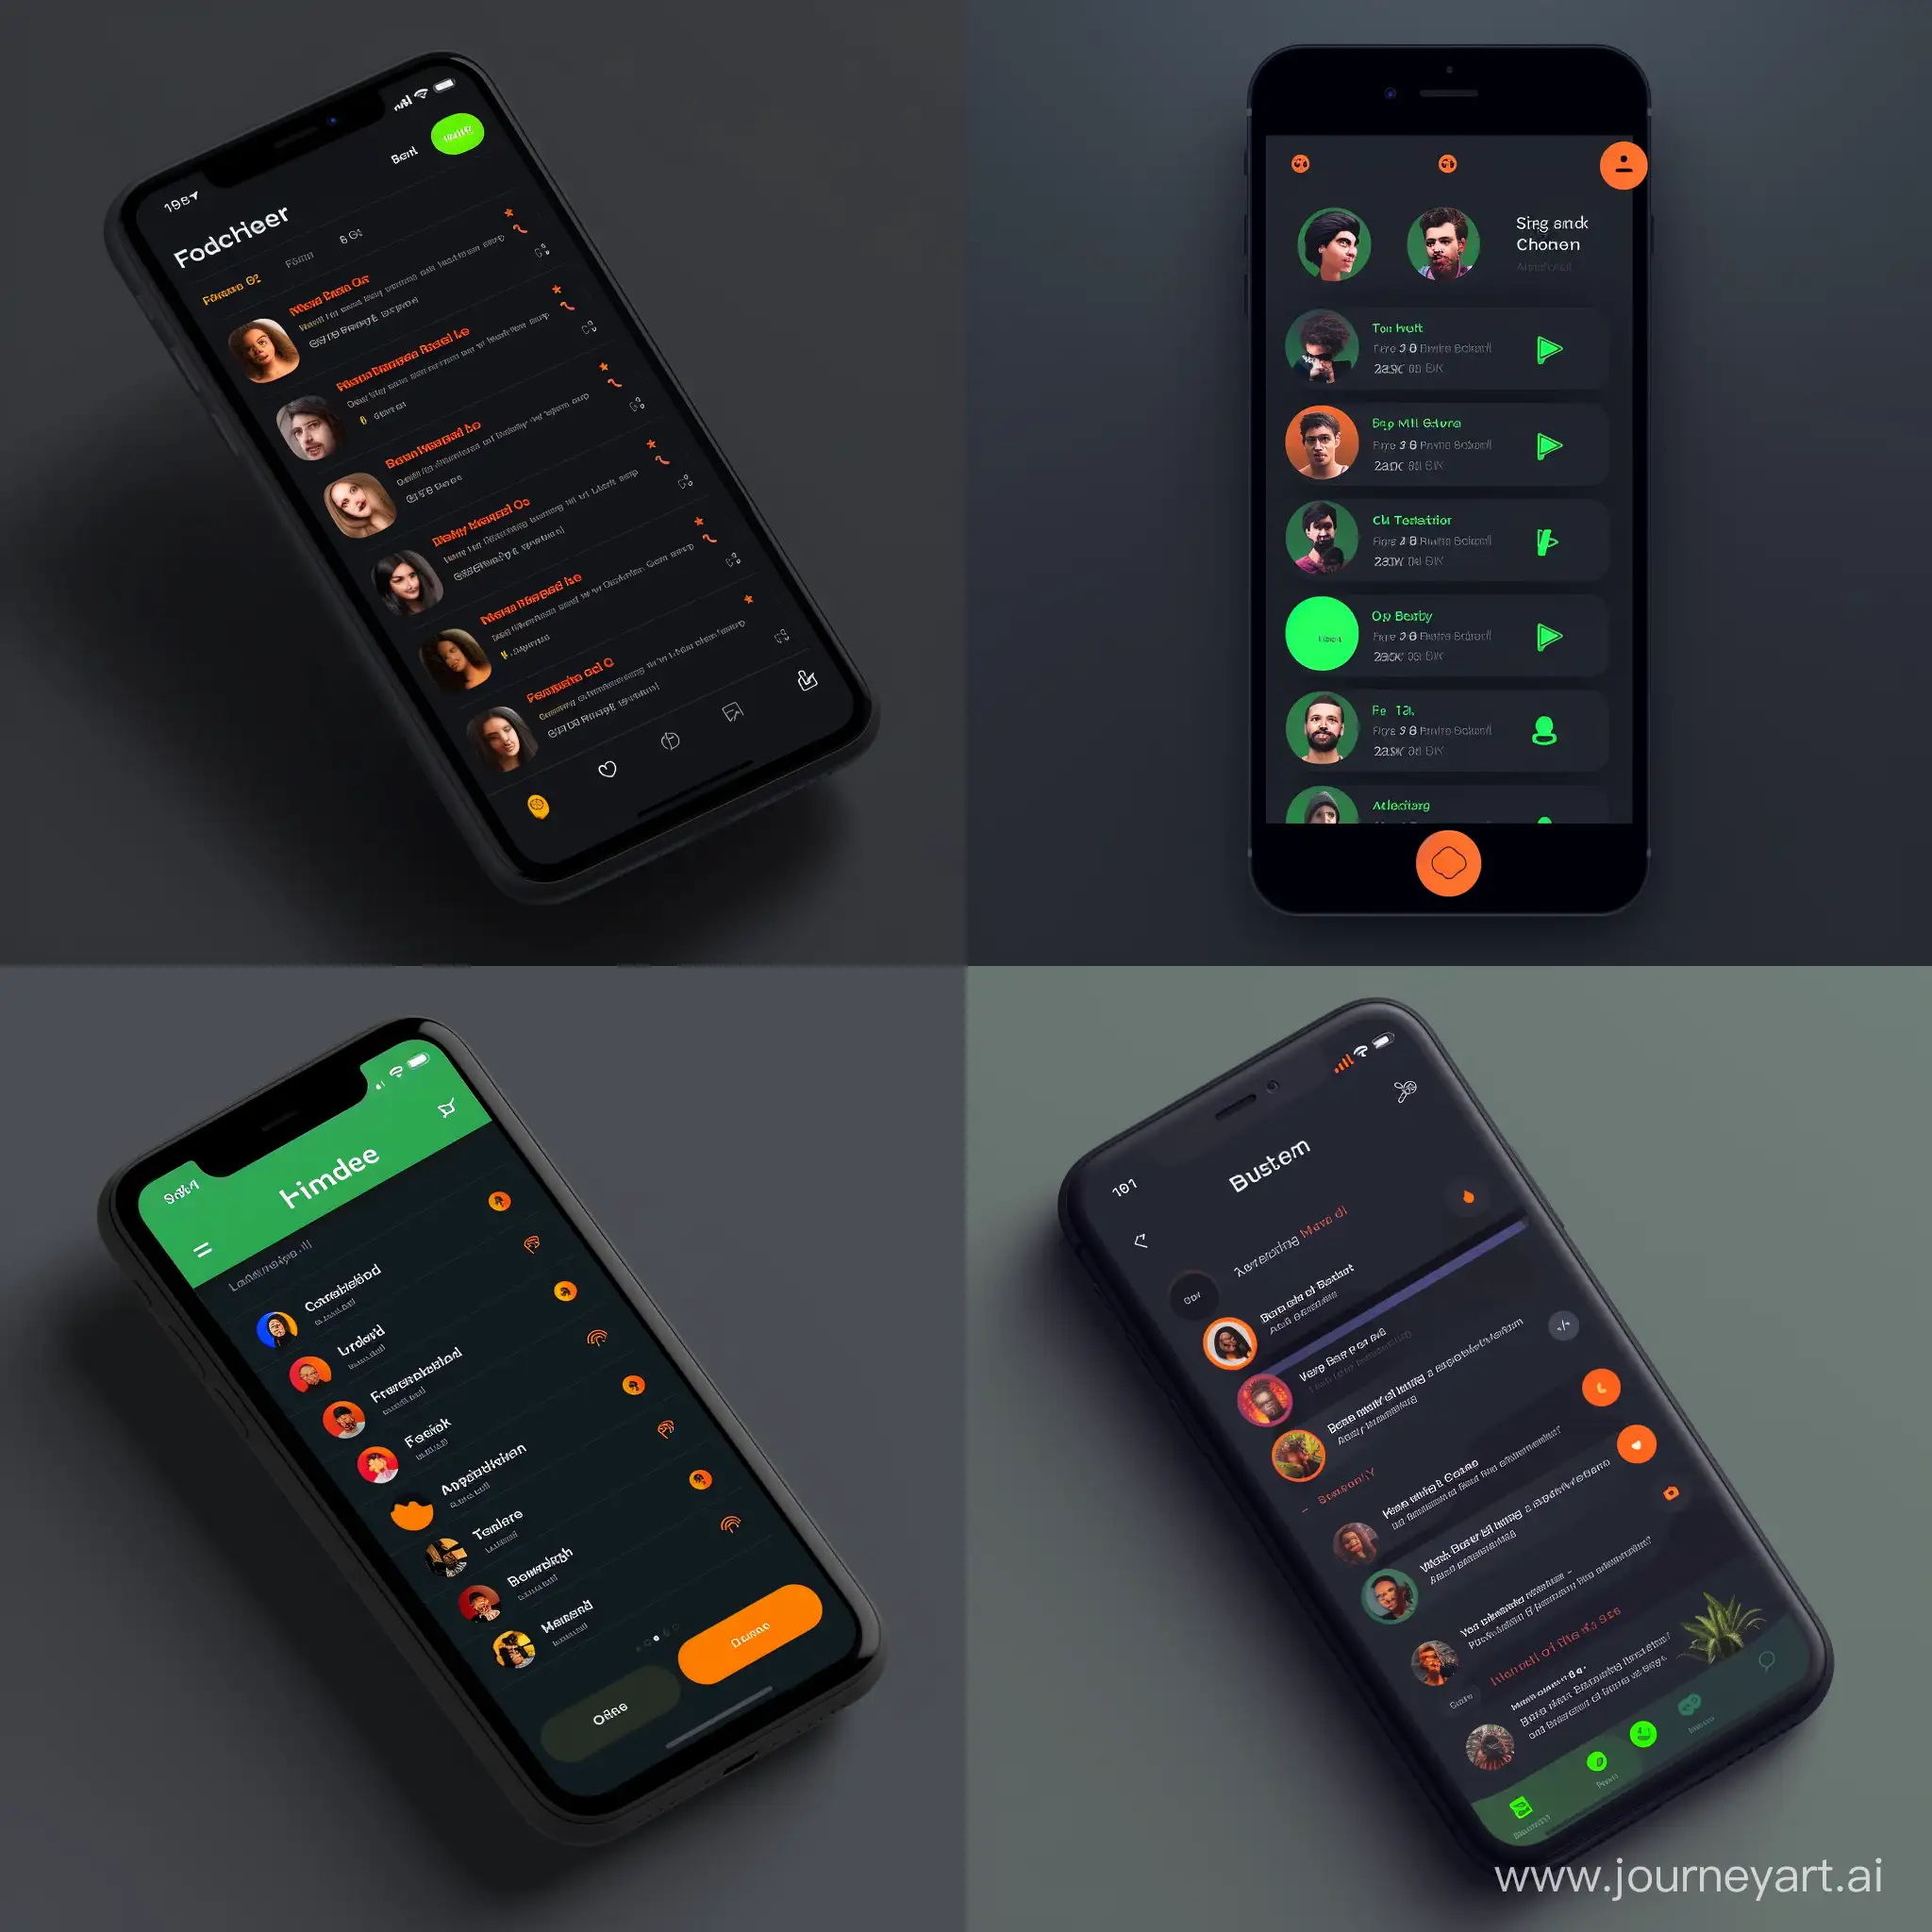 modern ios app list of friends 
main color - dark
color 1 - green
color 2 - orange
